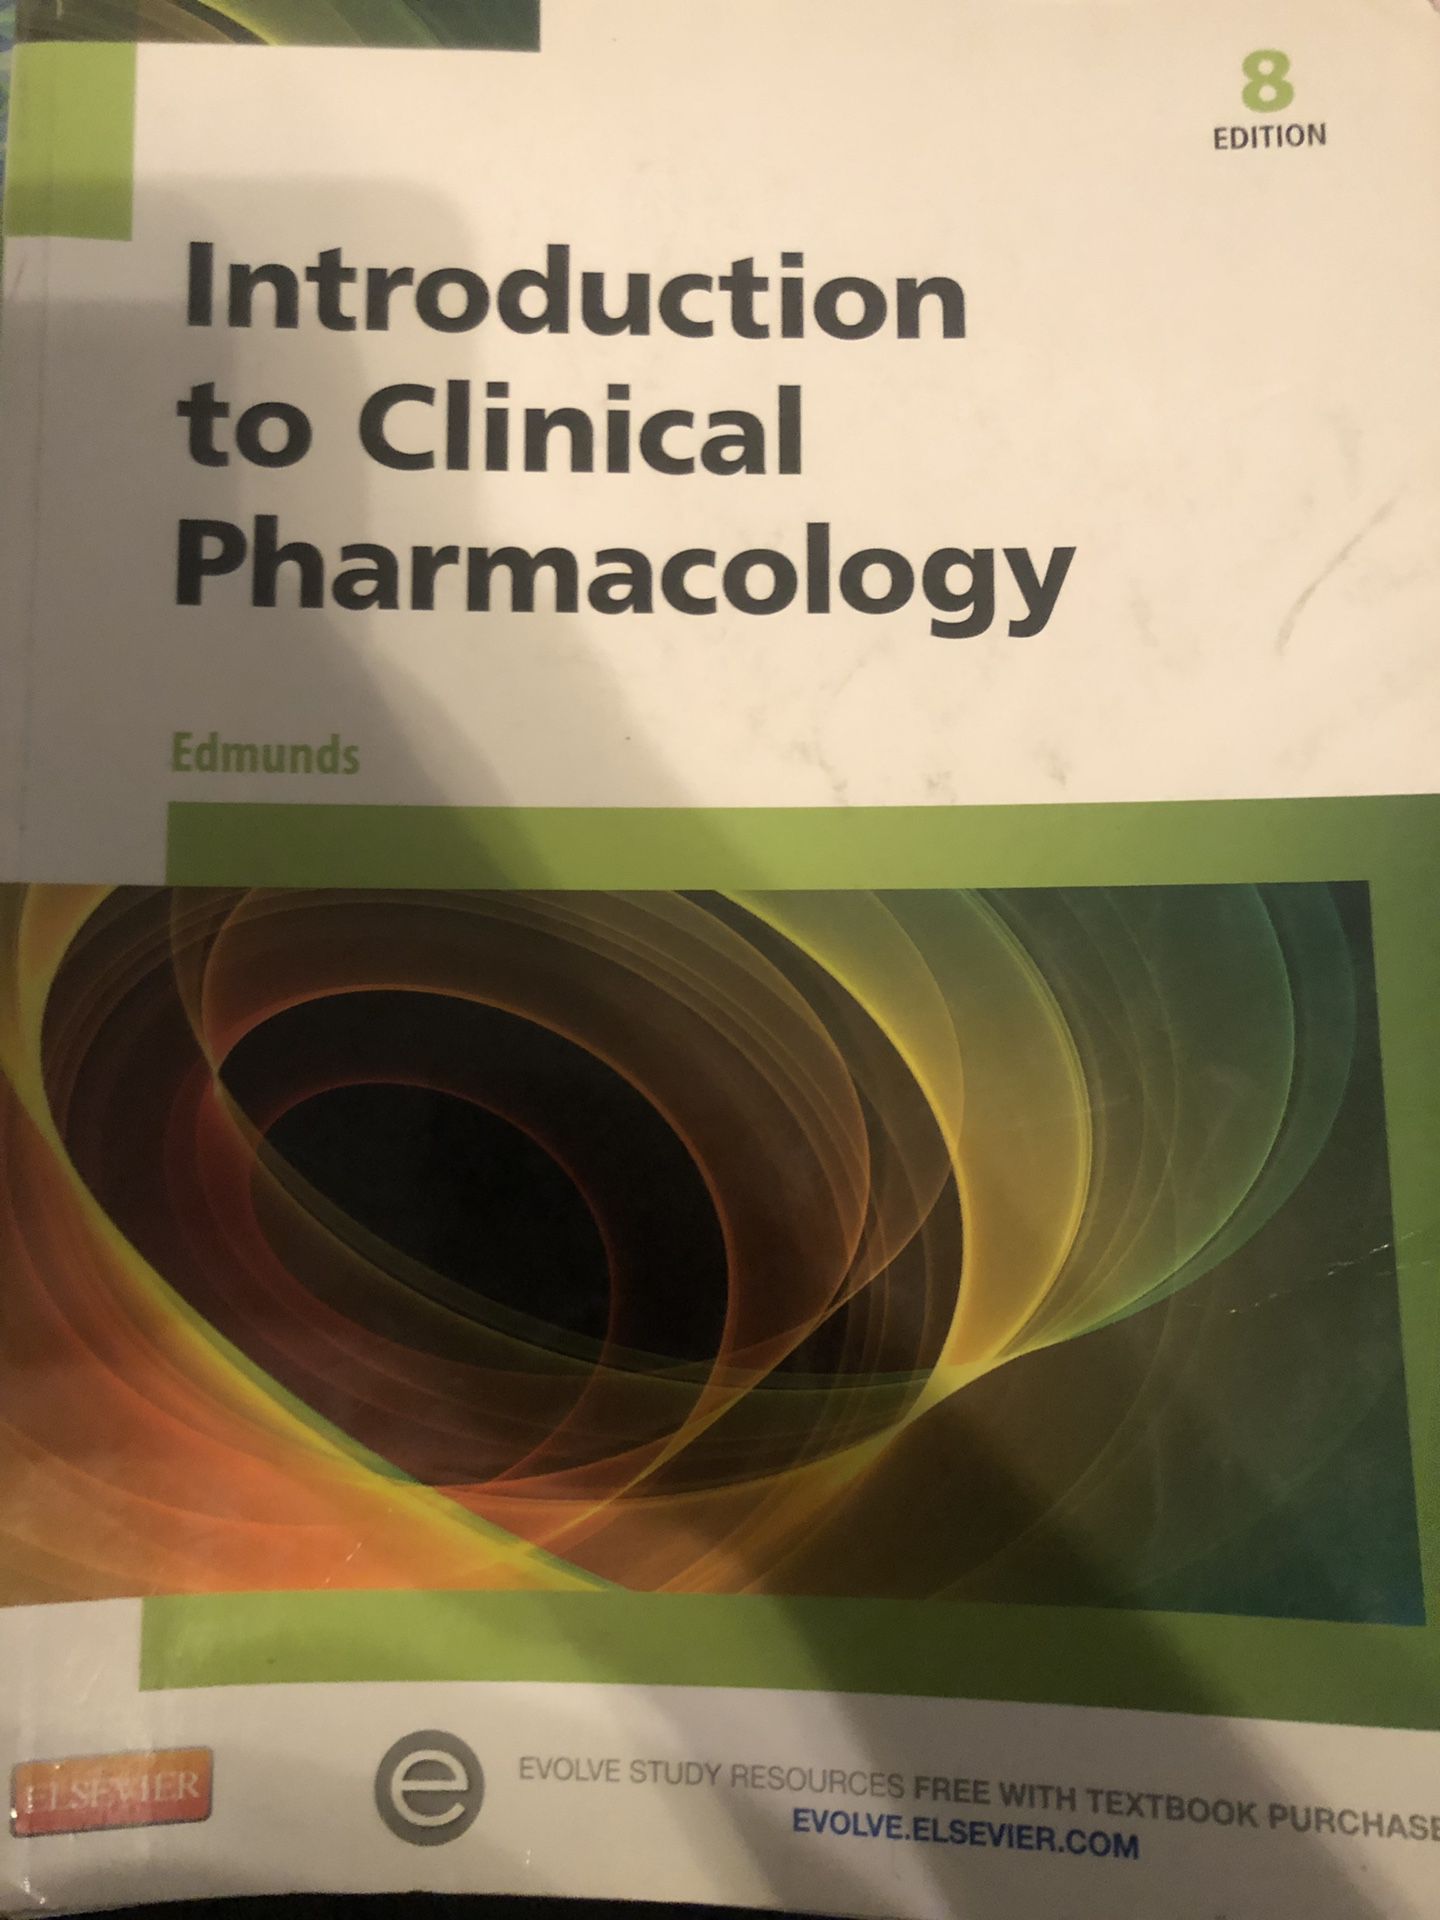 Pharmacology textbooks